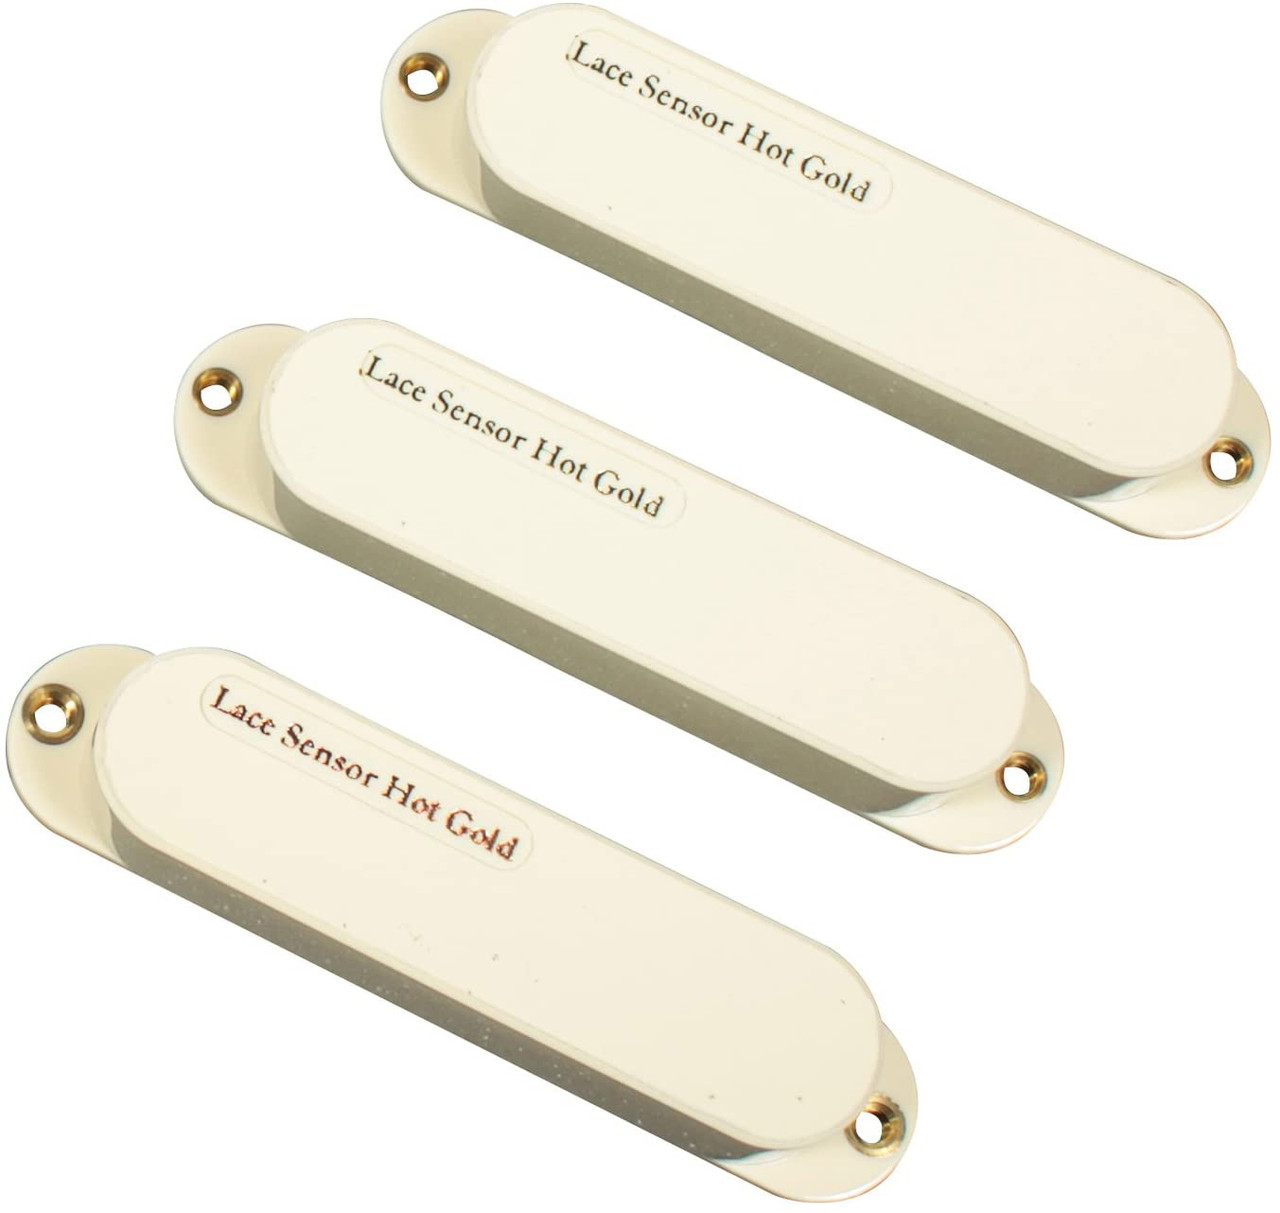 Lace Sensor Hot Gold set w/Hot 13.2K Bridge - cream